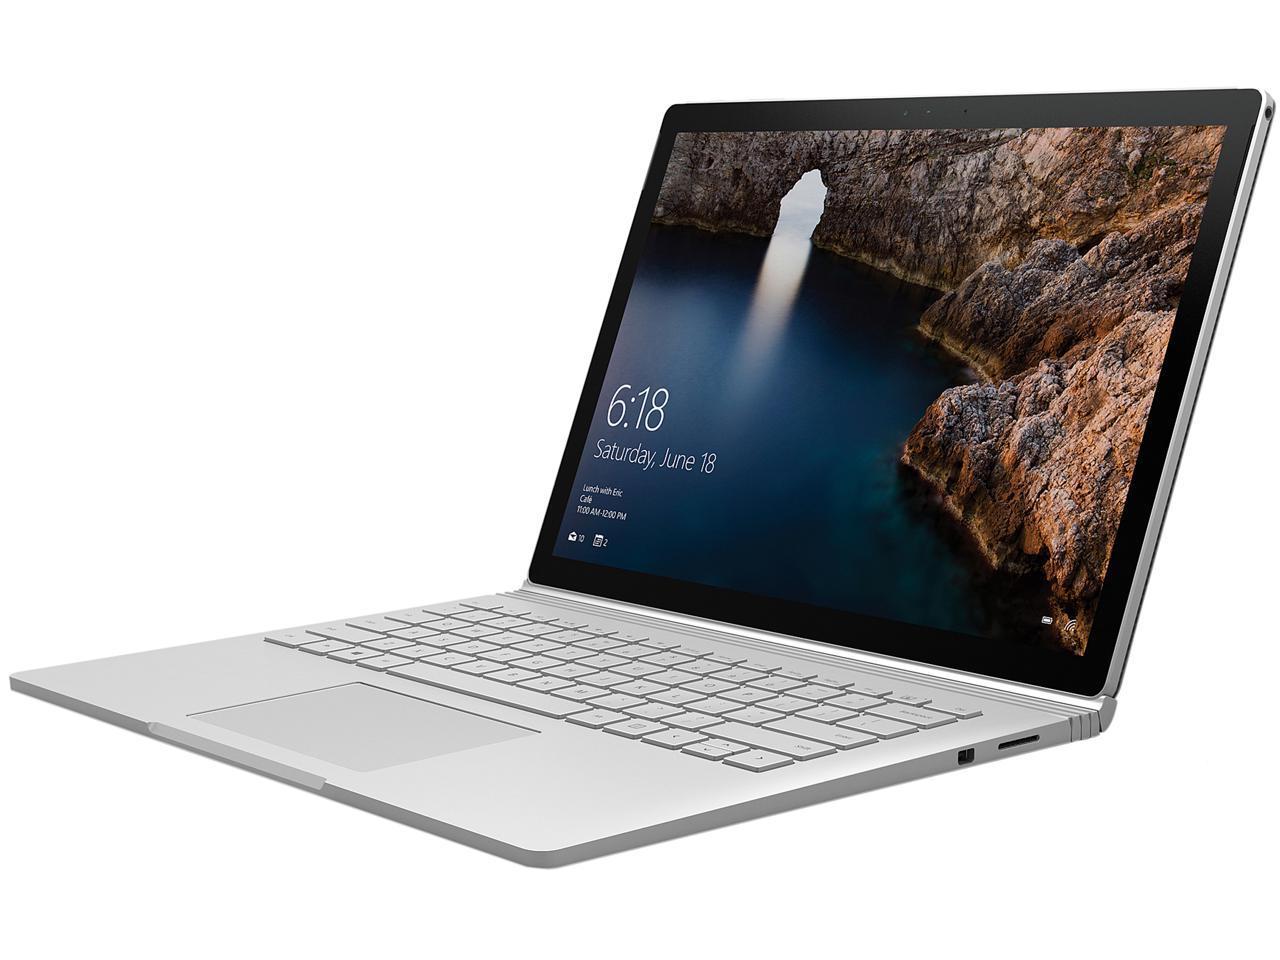 Refurbished Certified Microsoft Surface Laptop 3 13.5in Touchscreen i5 8GB 256GB Certified Refurbished Backlit Keyboard, Bluetooth,WIFI, 1 Year Warranty. Reg $1399.99